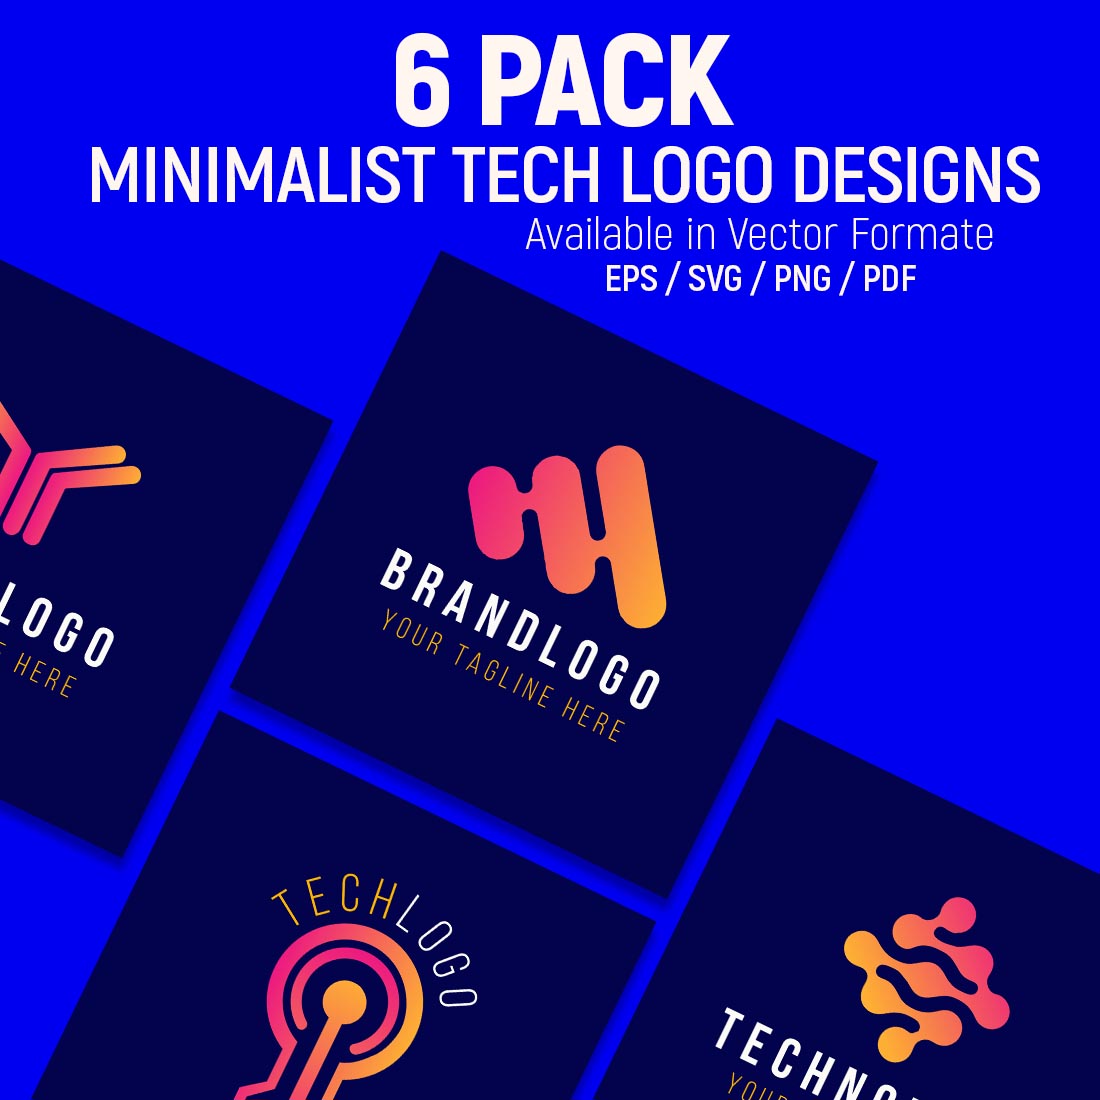 Minimalist Tech Logo Design Bundle cover image.